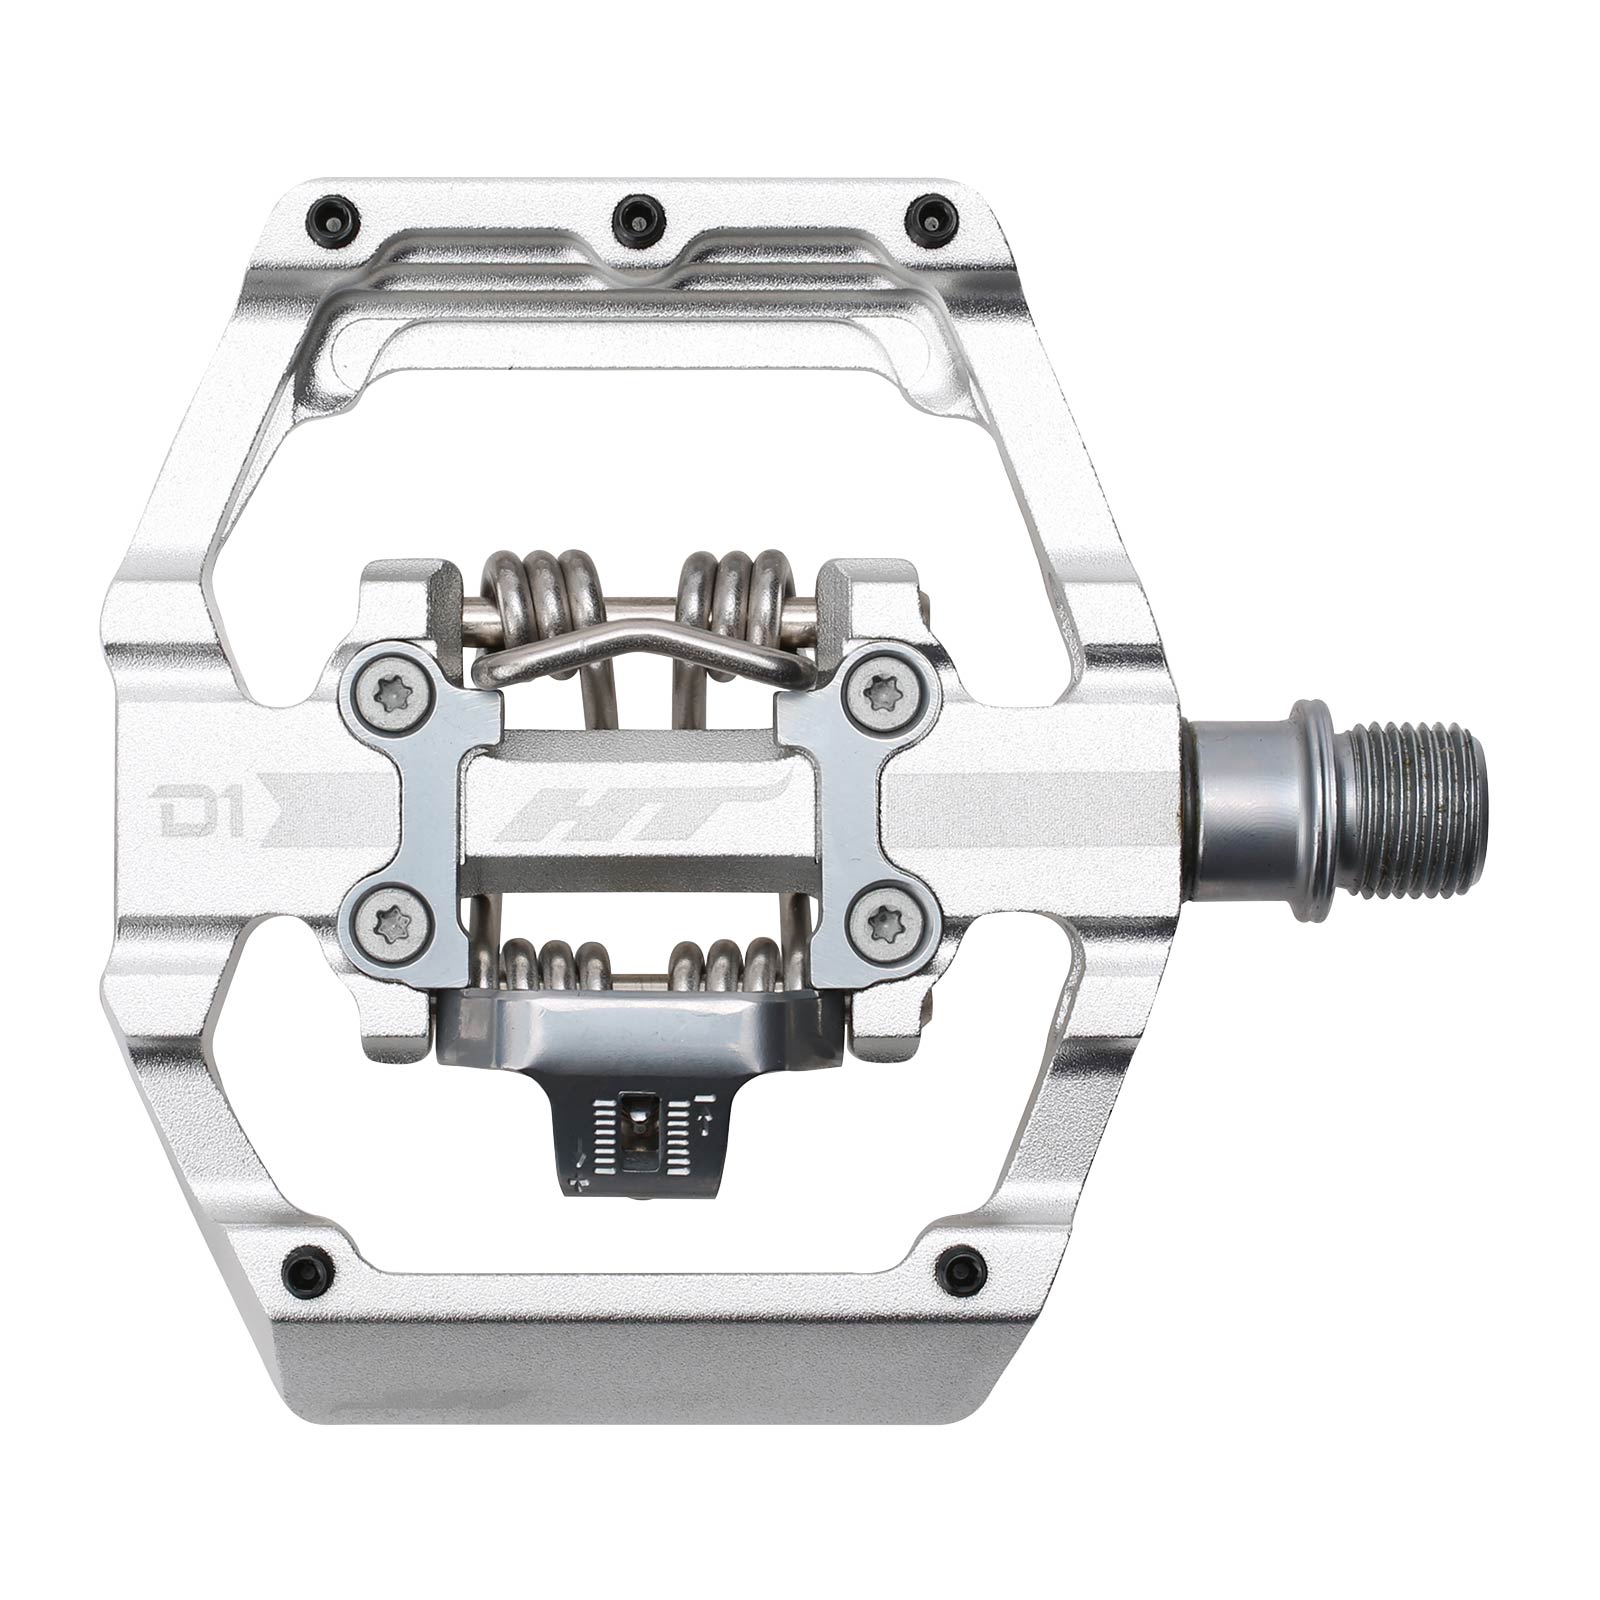 Ht D1 Pedals Alloy / CNC CRMO - Silver